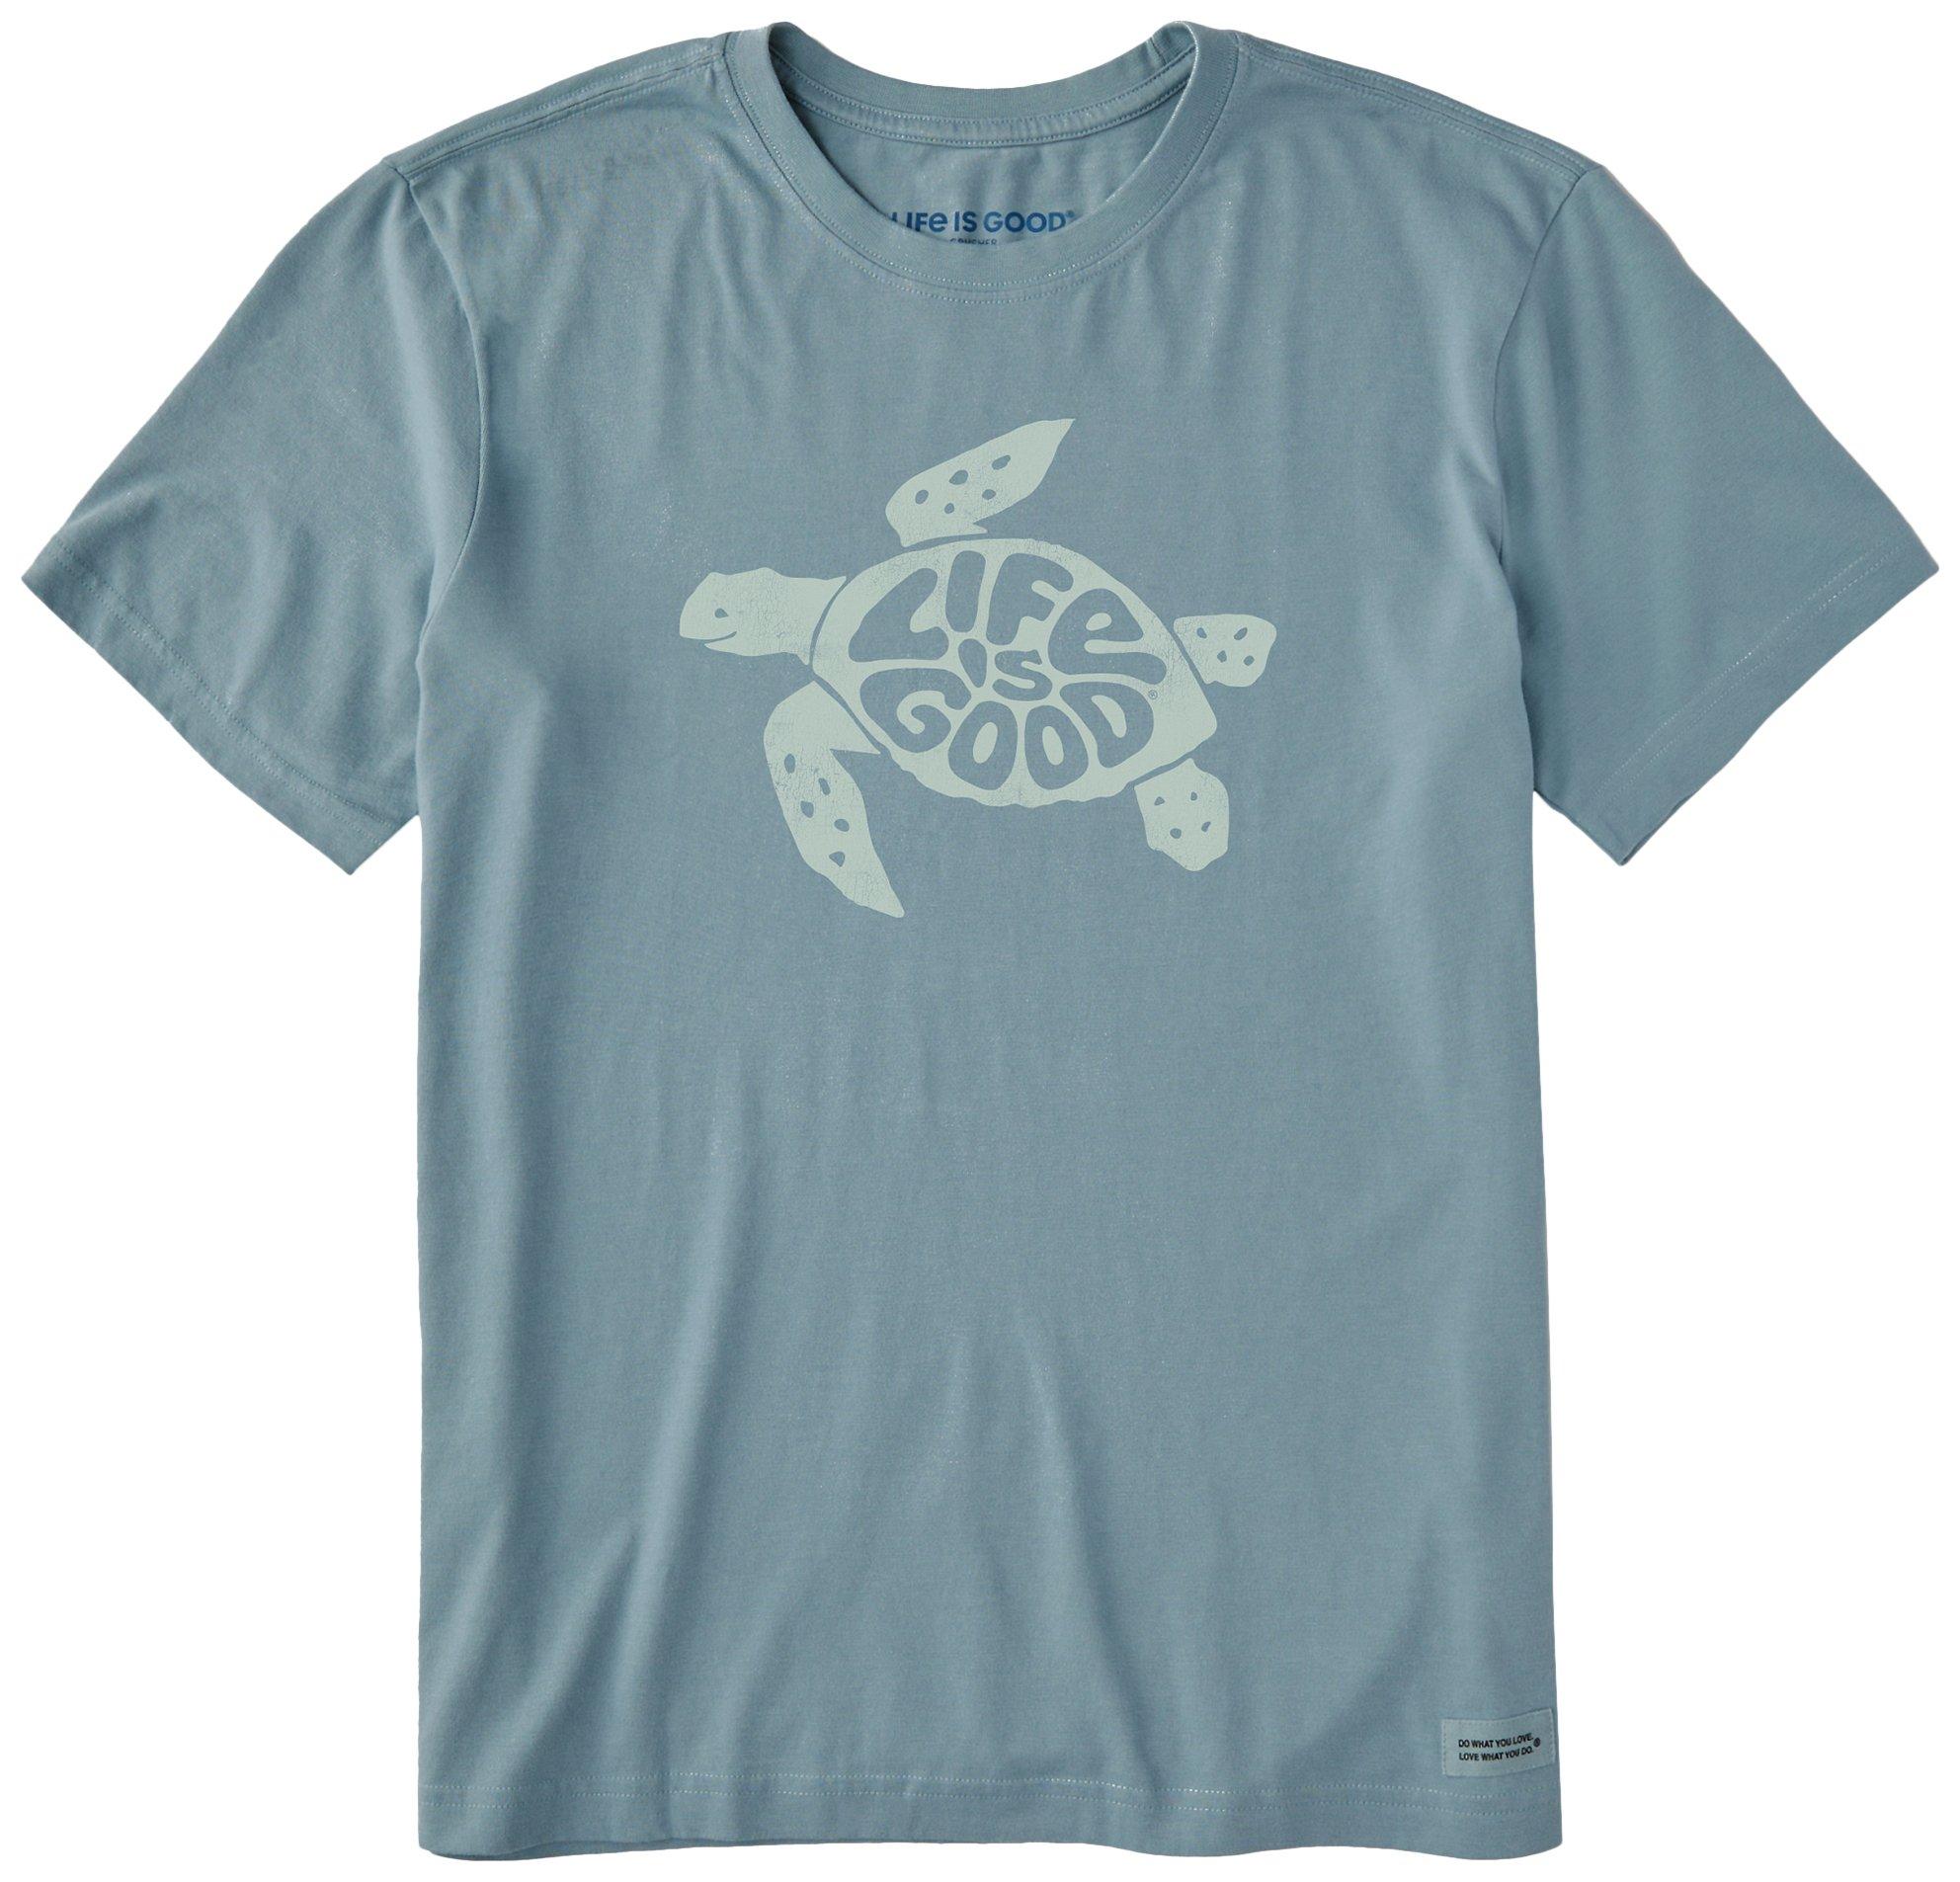 Mens Groovy Turtle Crusher-LITE Short Sleeve T-Shirt